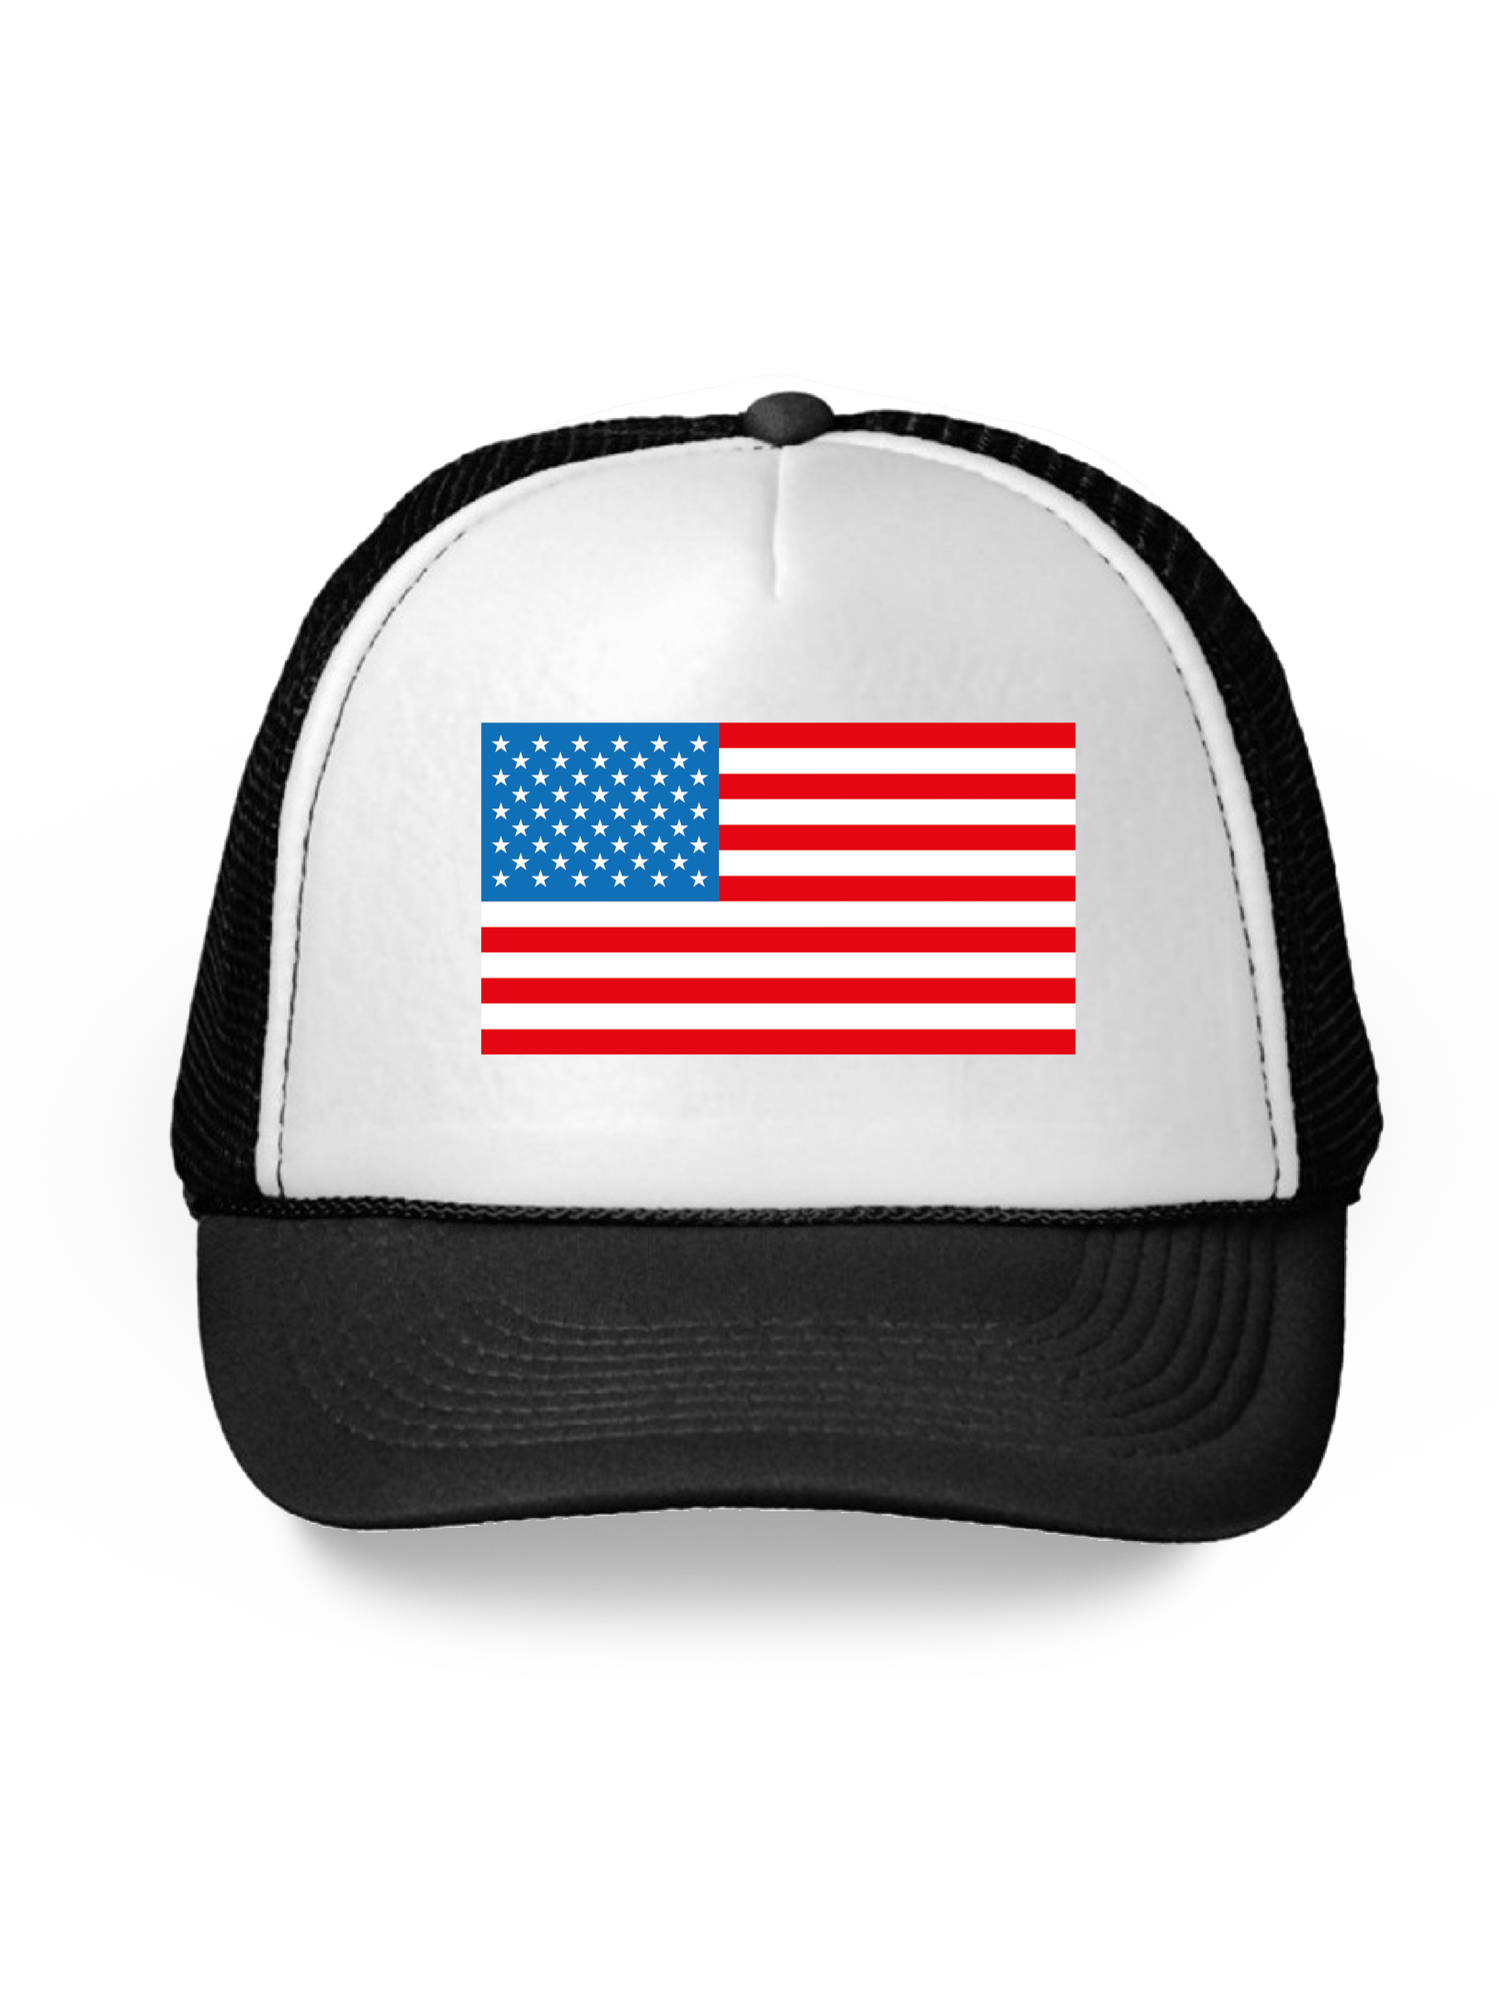 Awkward Styles USA Hat American Flag Hat USA Trucker Hat 4th of July Hats American Flag Hat USA Baseball Cap Patriotic Hat American Flag Men Women 4th of July Hat 4th of July Accessories - image 1 of 6